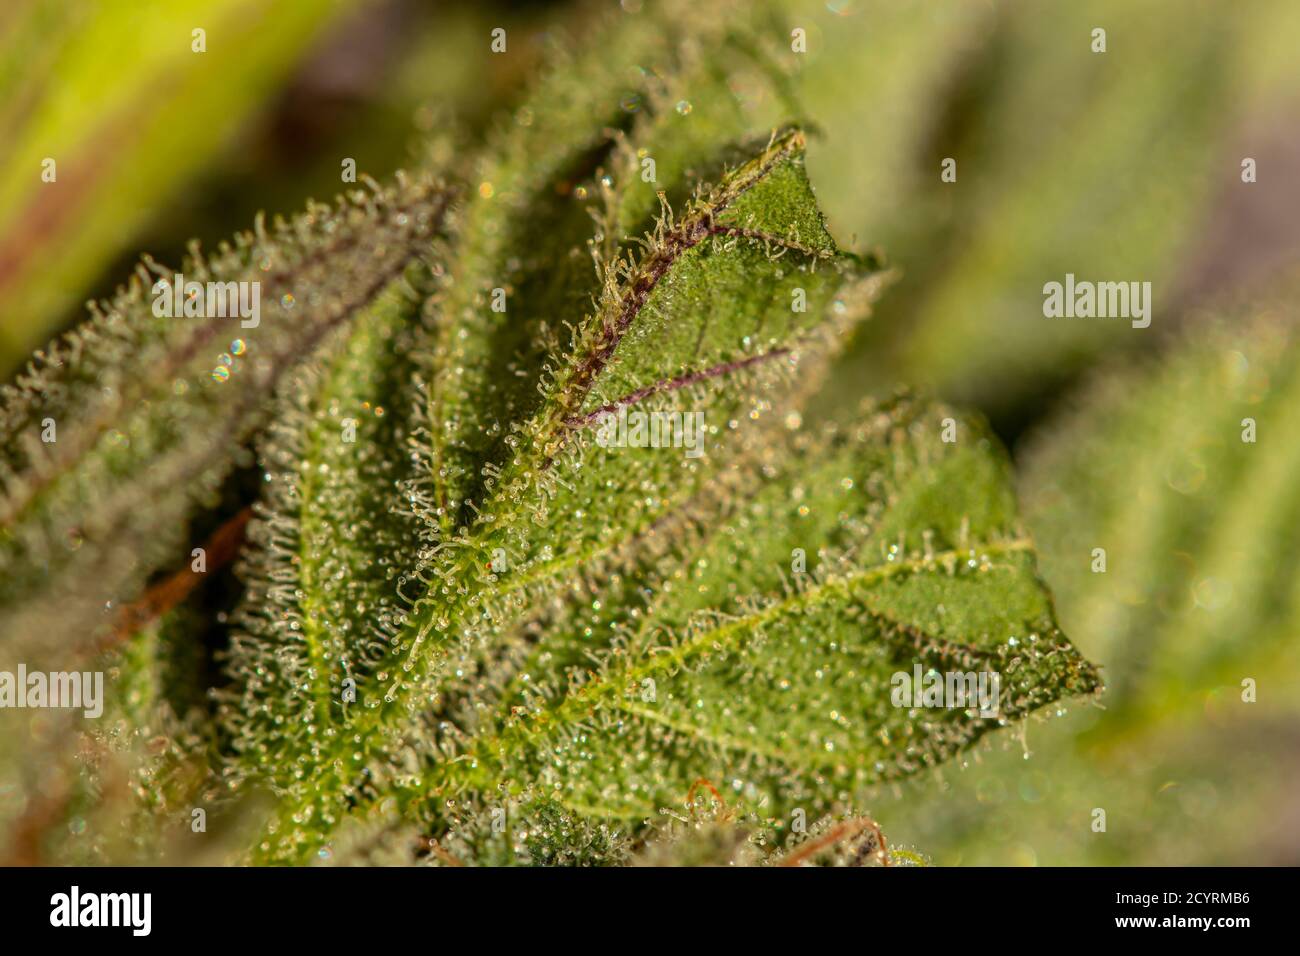 Crystals on cannabis leaf Stock Photo